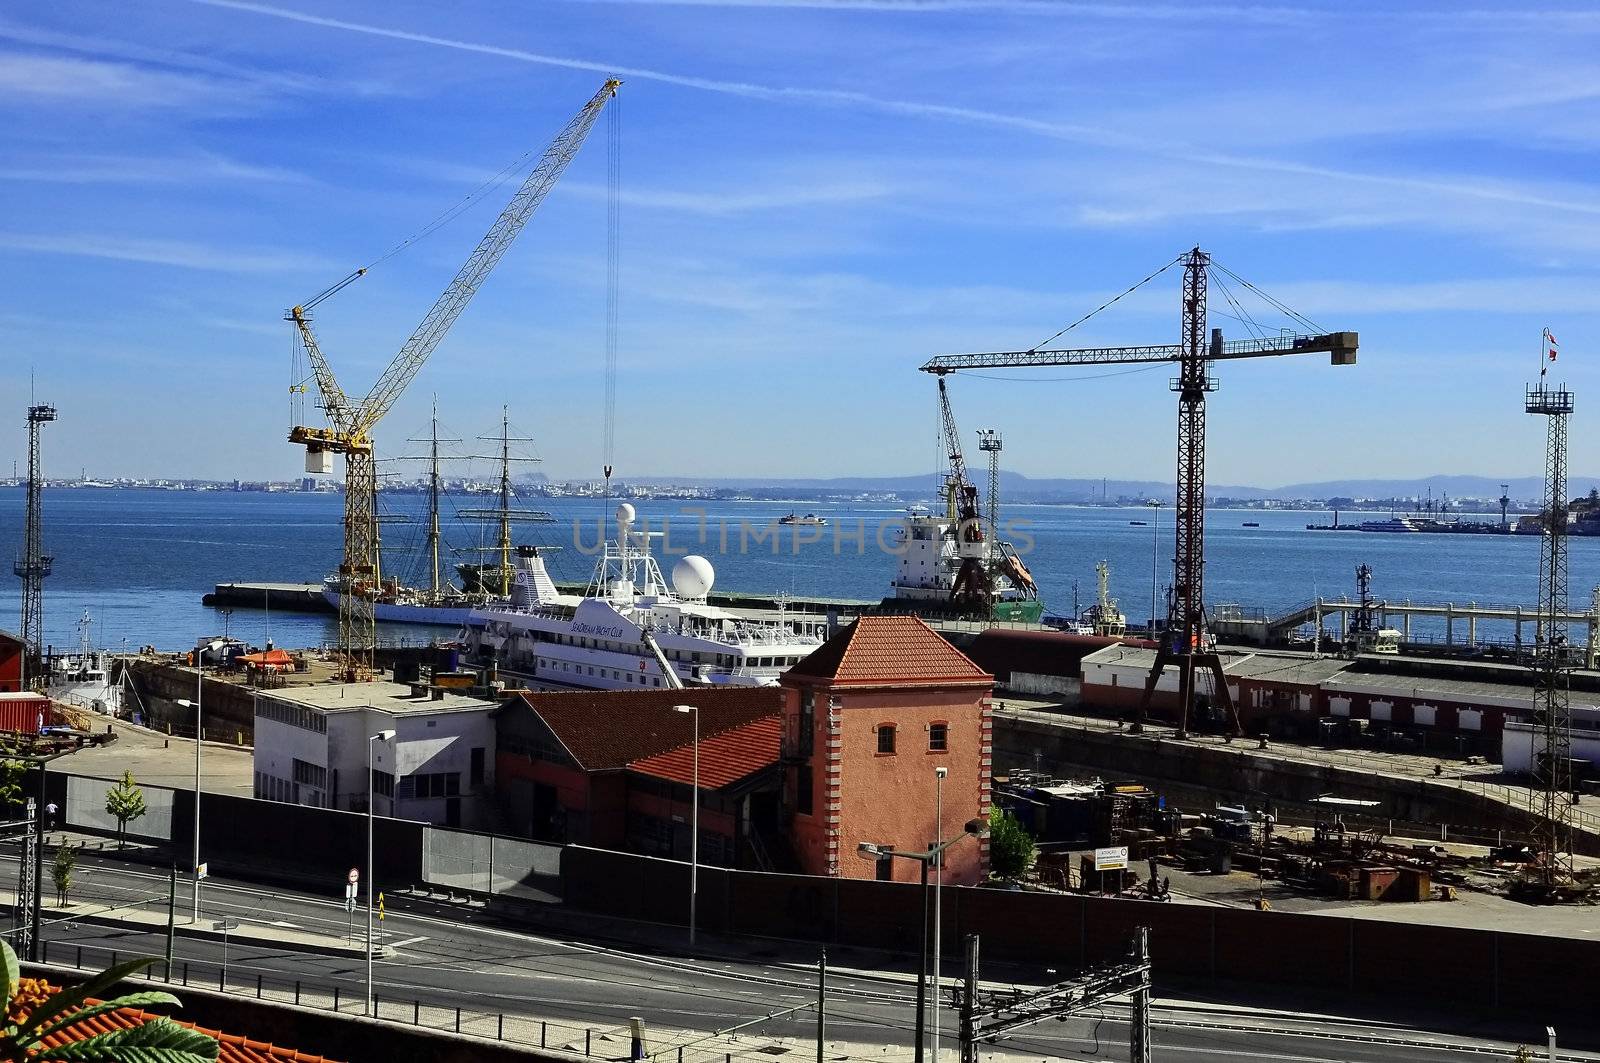 Portugal loading port by vas25